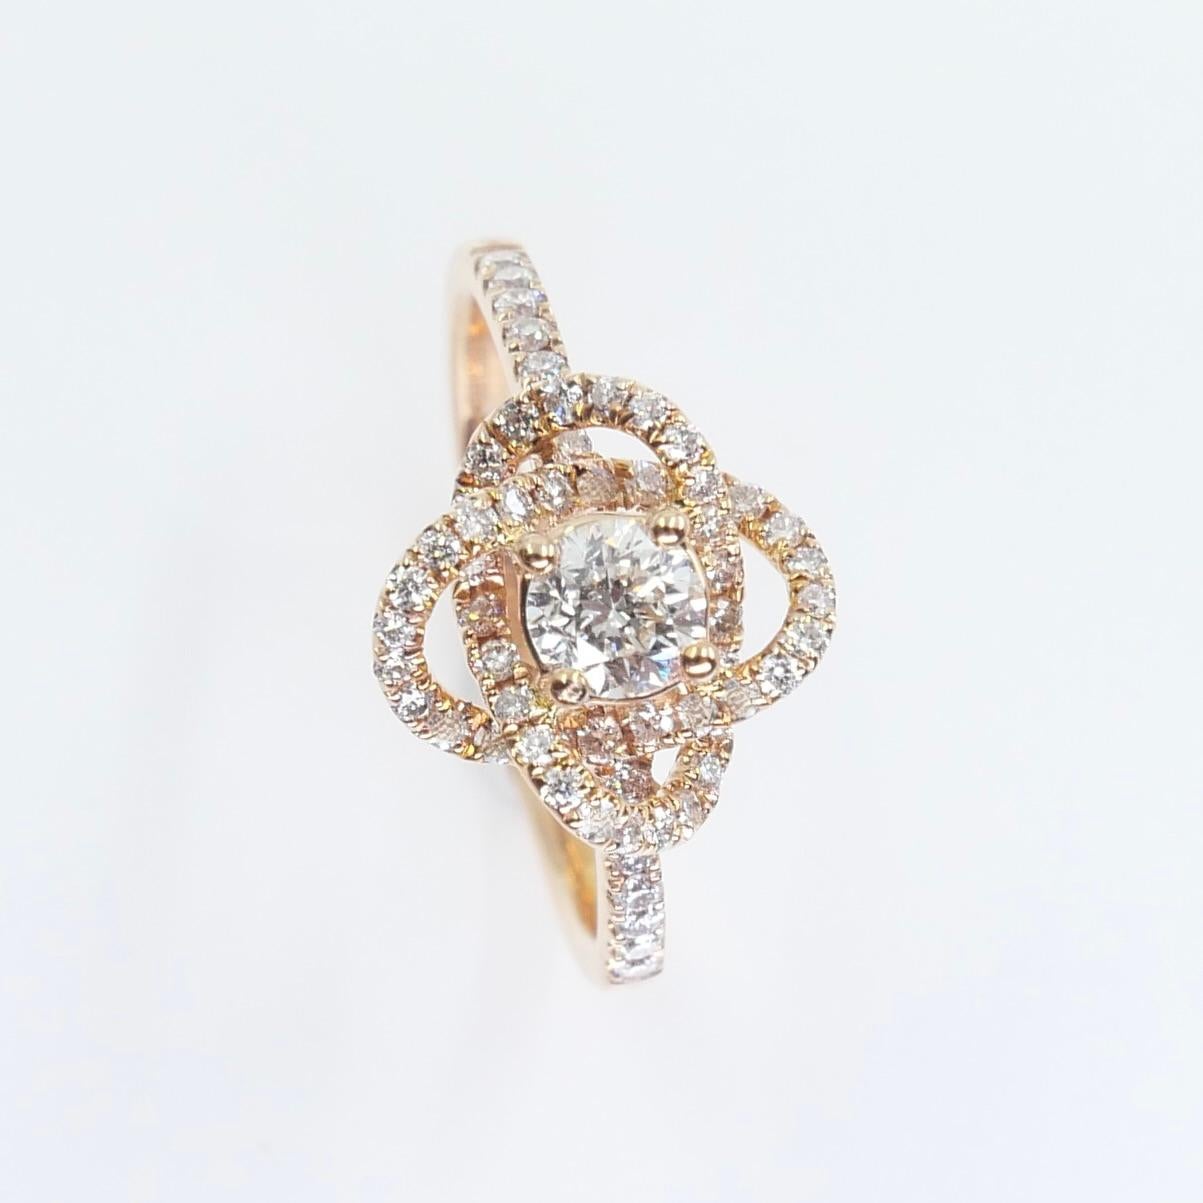 3D Rose Flower Diamond Ring, 18K Rose Gold, Dainty, Excellent Depth of Field For Sale 6